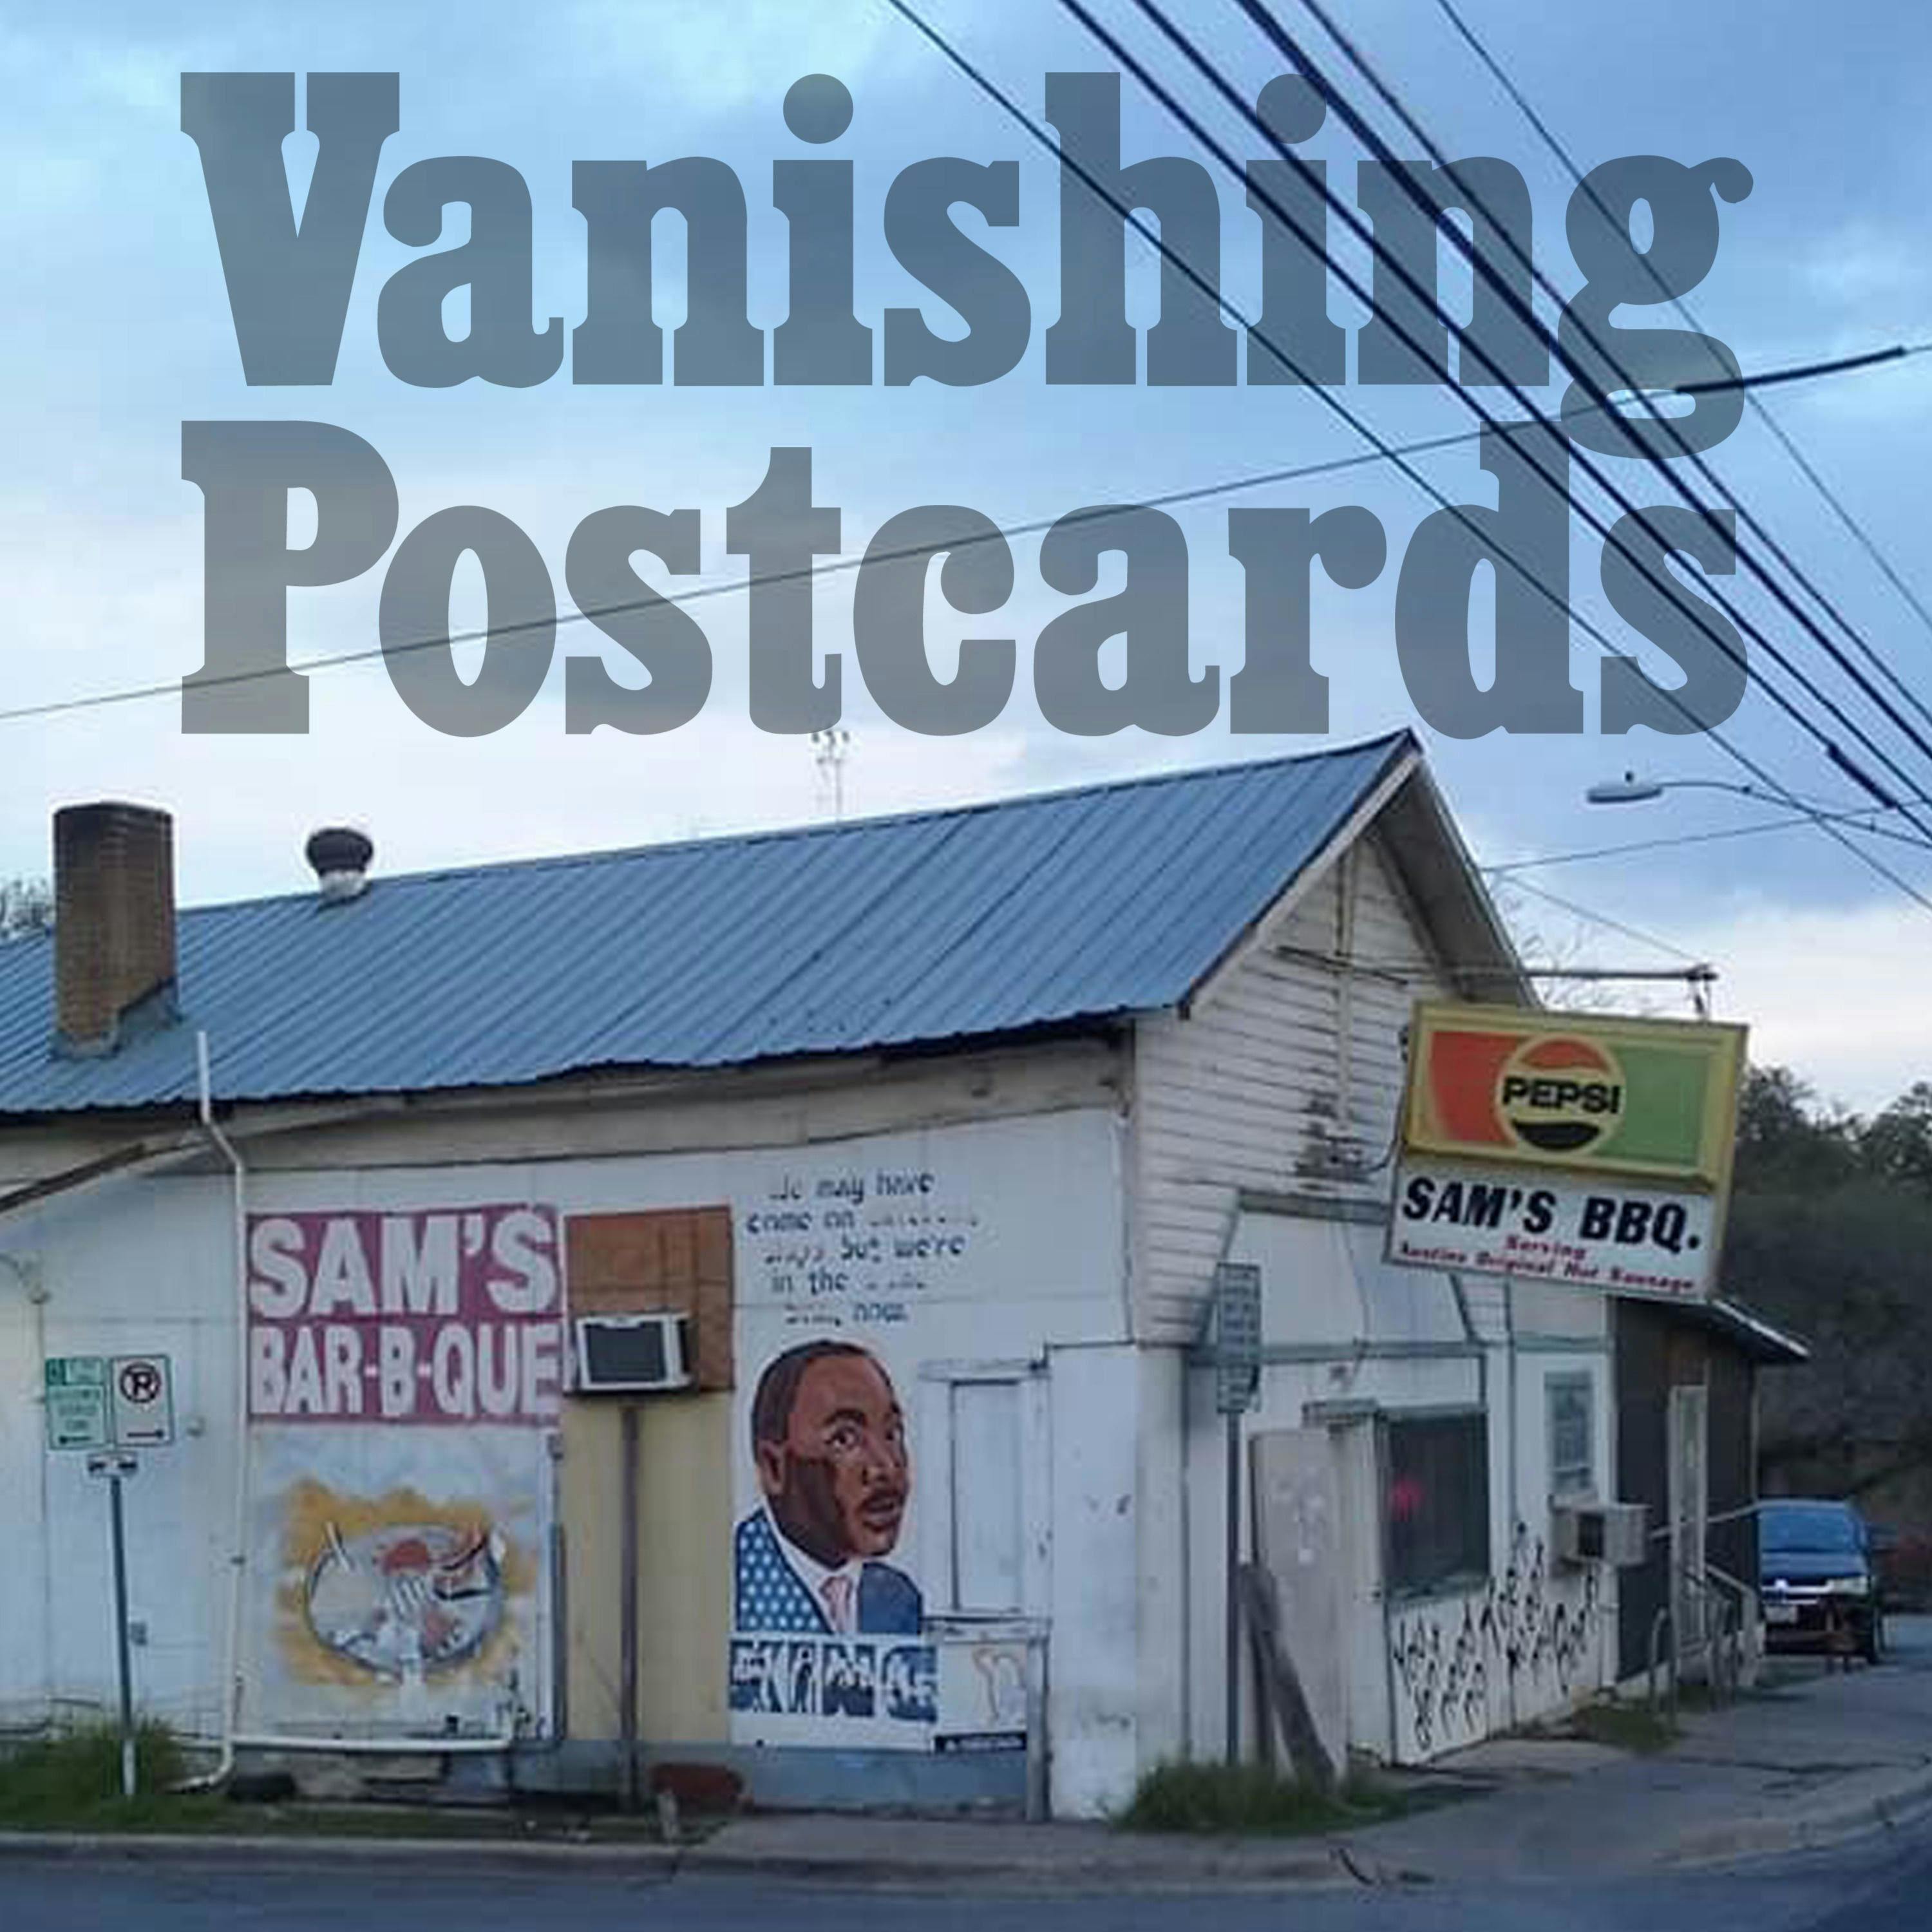 Vanishing Postcards